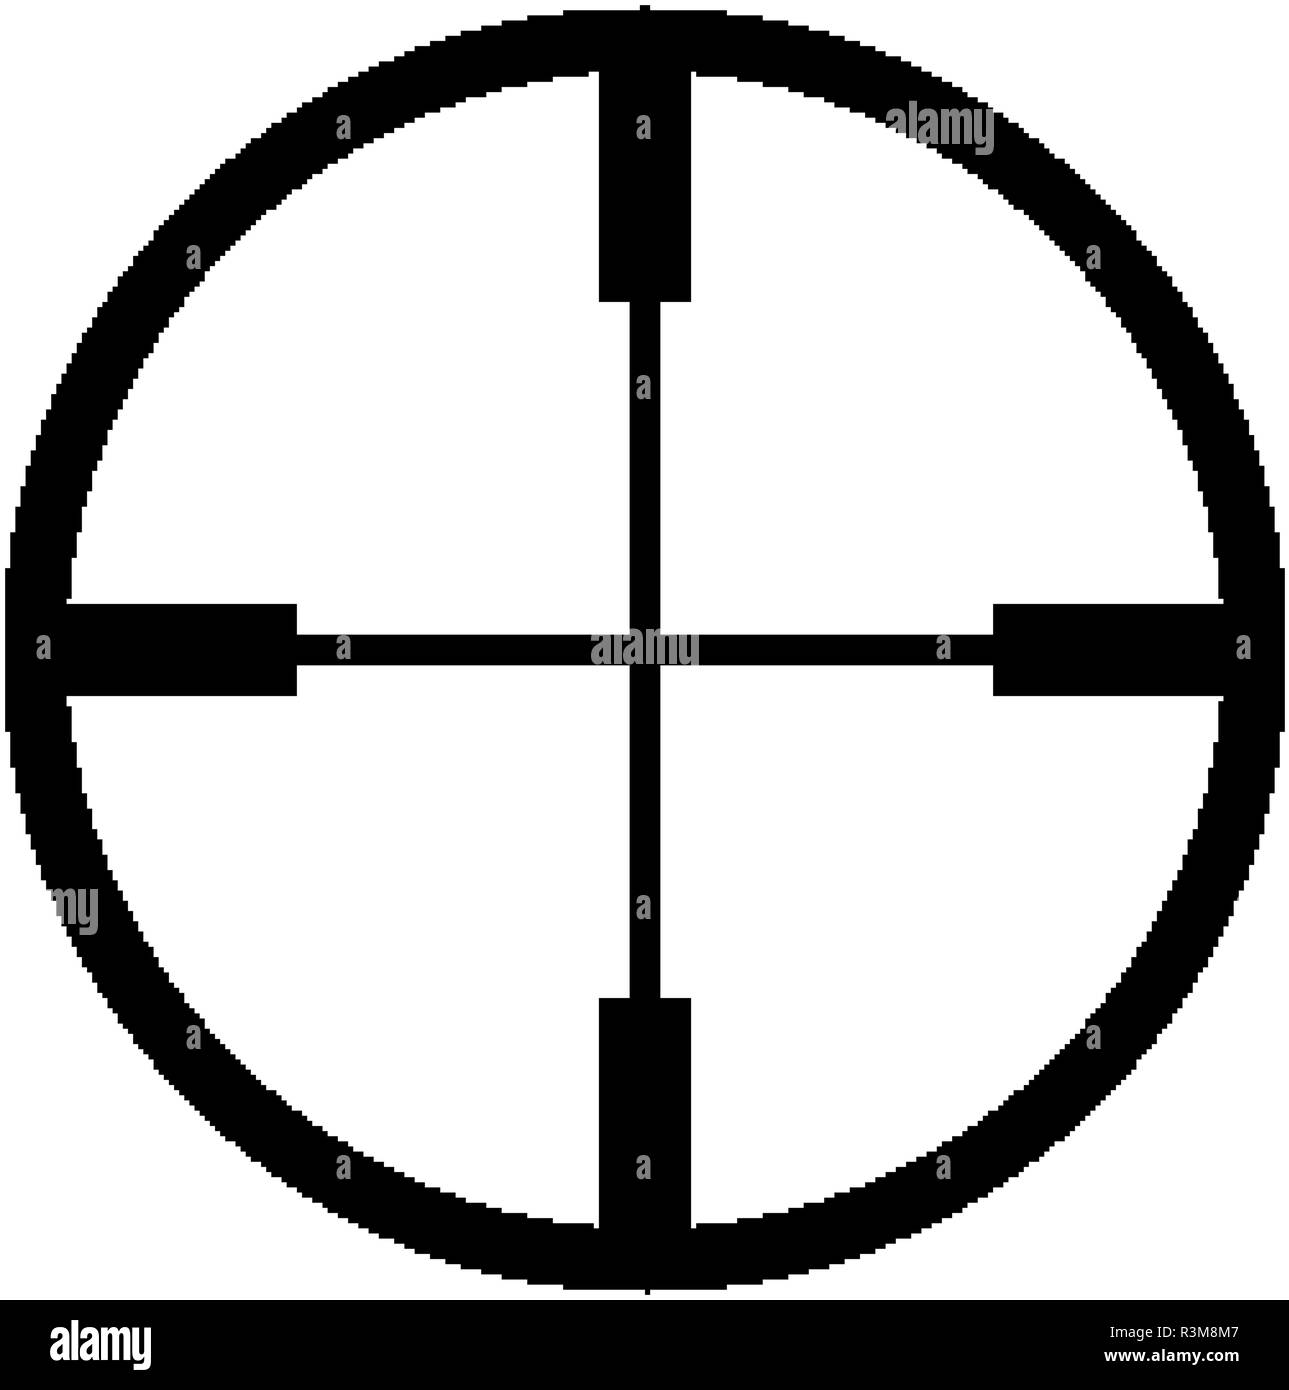 Black aim icon. Sniper scope crosshairs sign Stock Vector